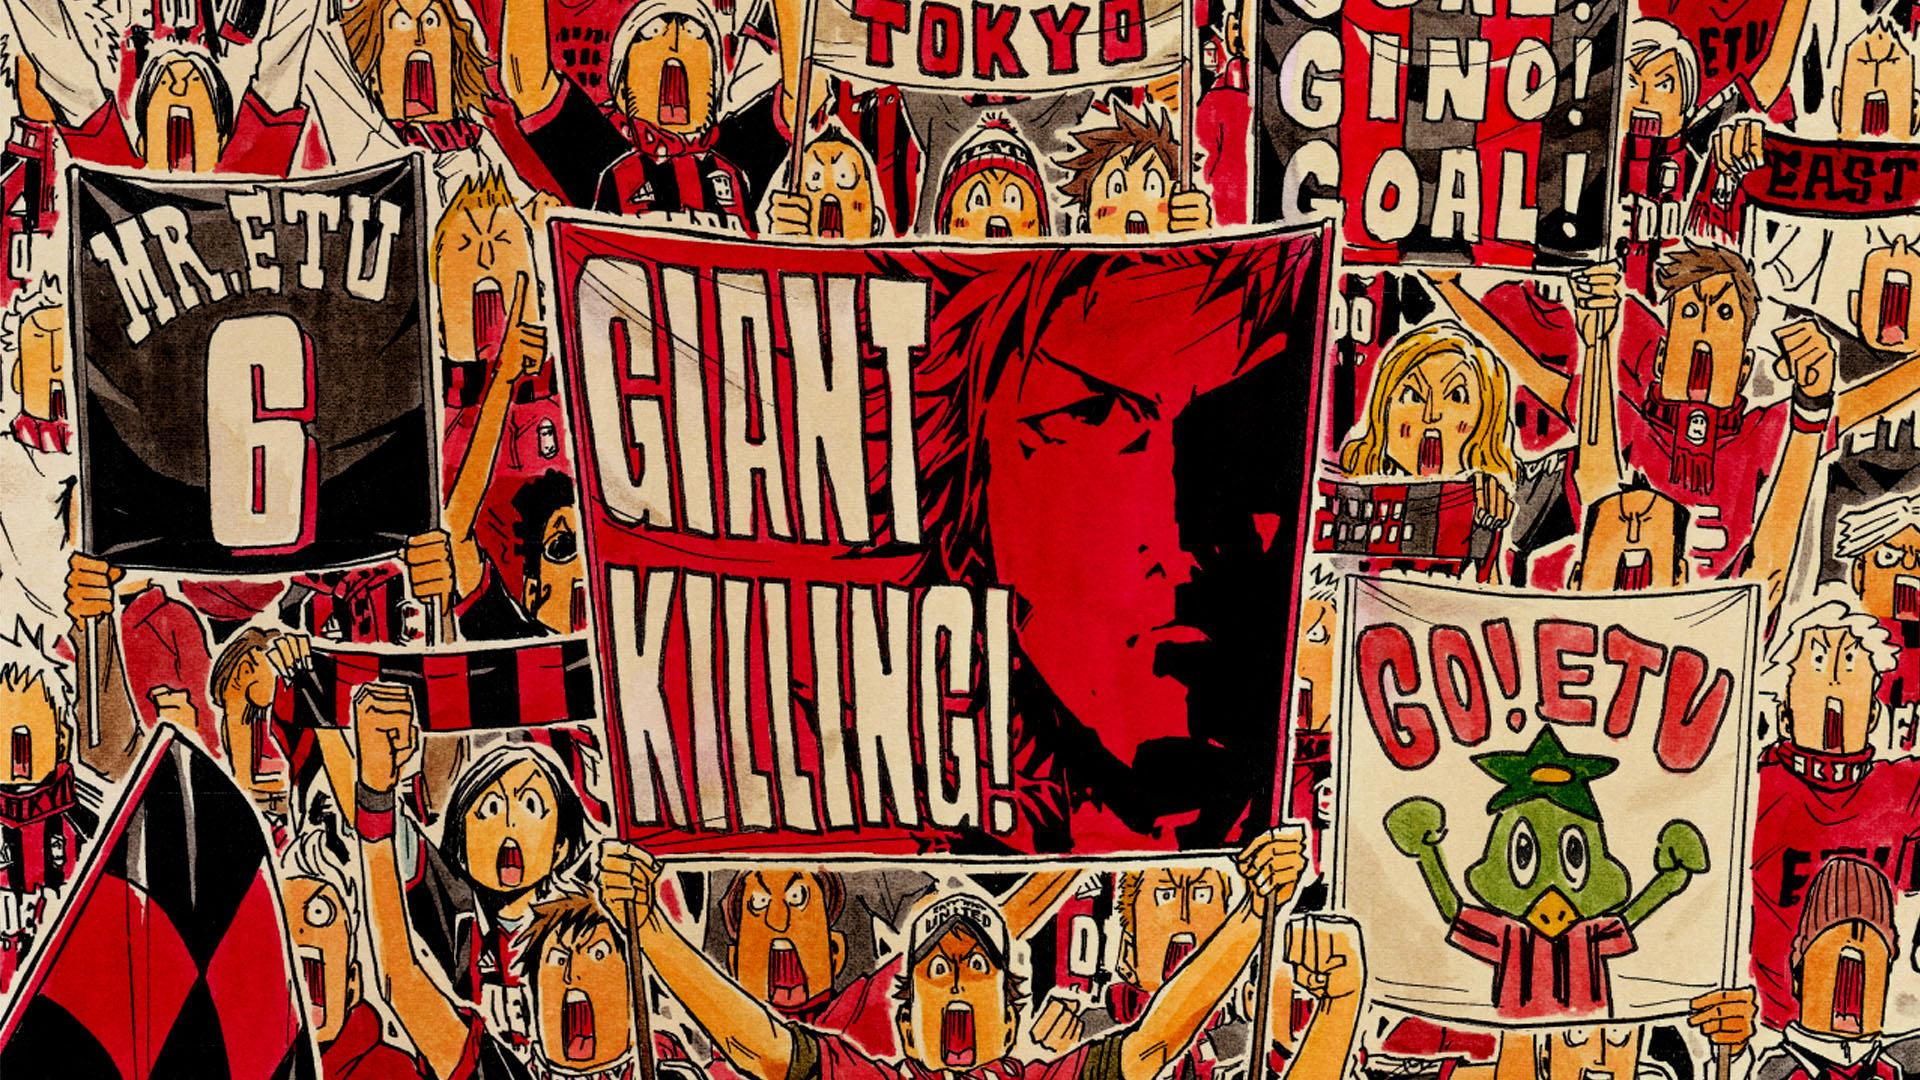 Giant Killing